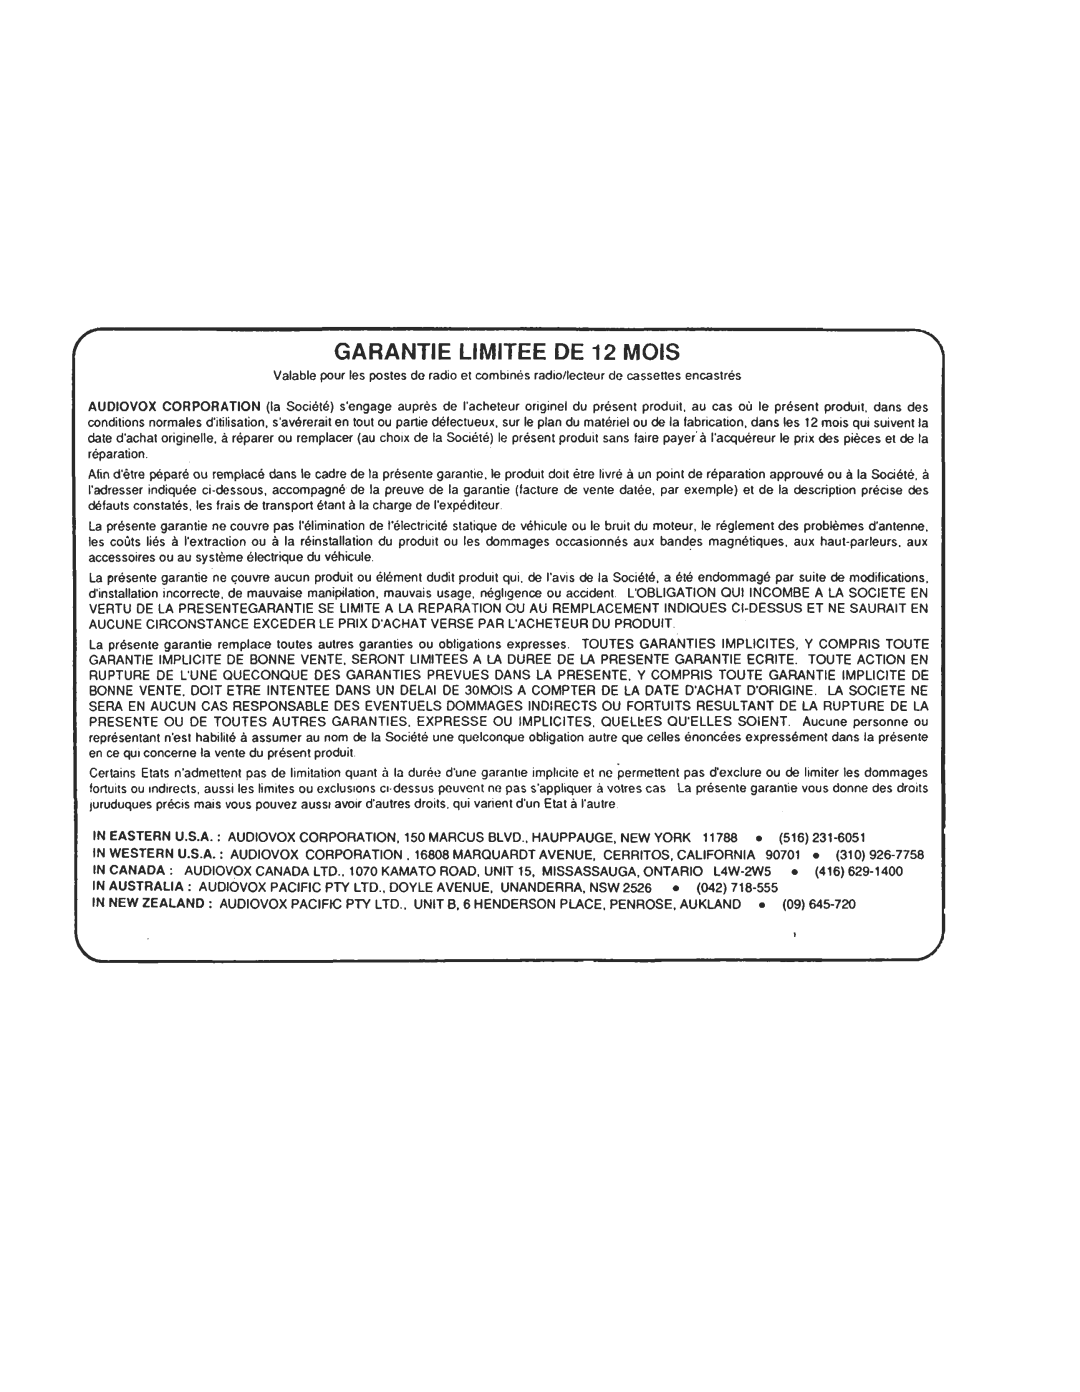 Audiovox Cassette Player owner manual Garantie, LlMITEE, Mois 